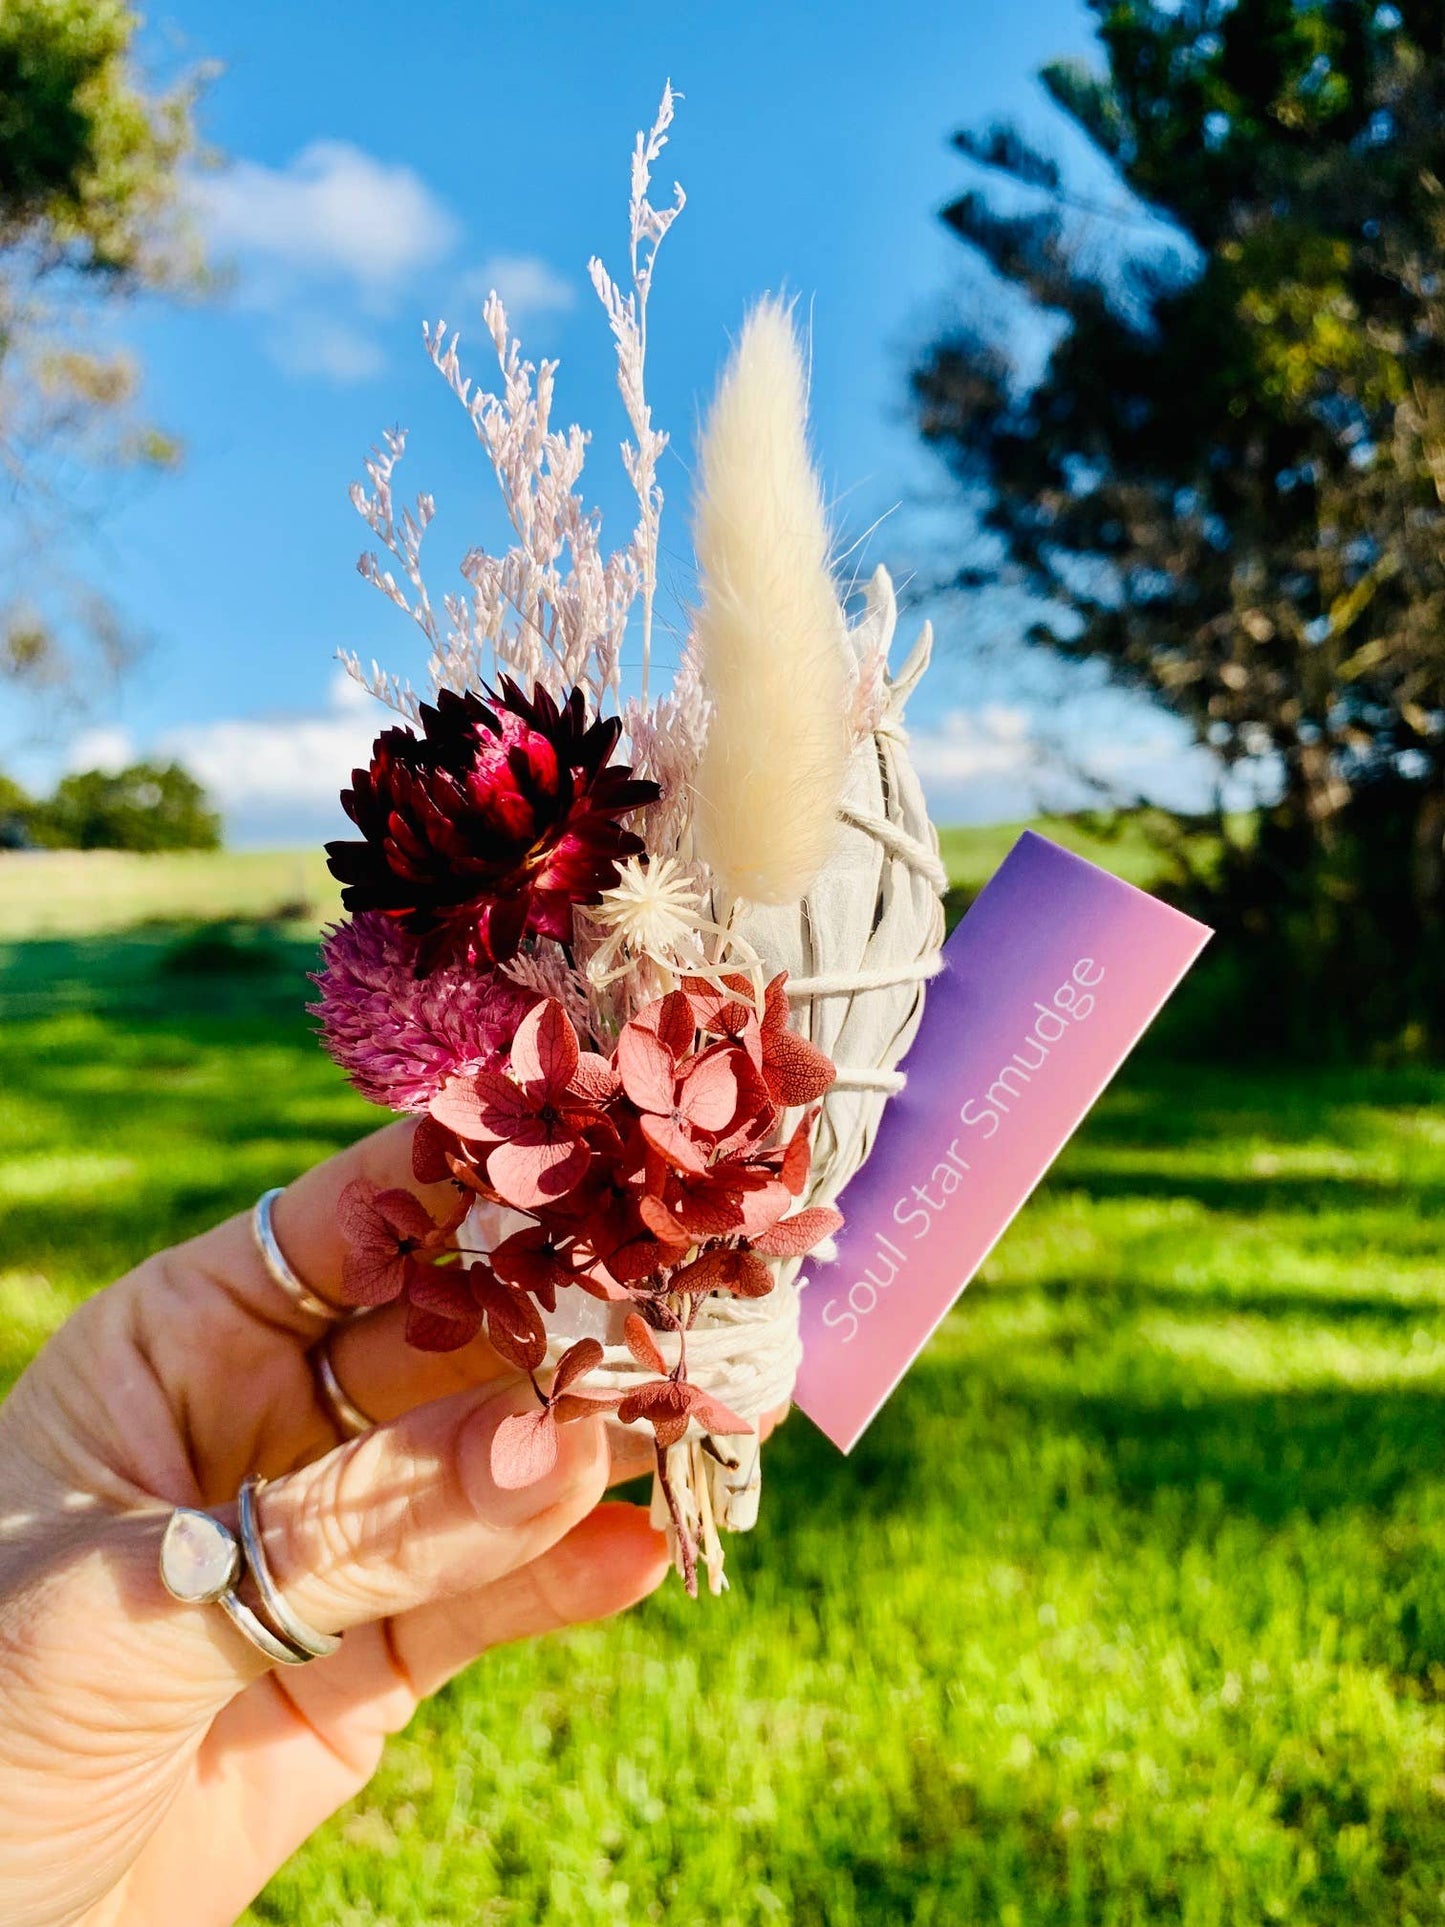 Organic Australian Sage Smudge Stick with Keepsake Flowers